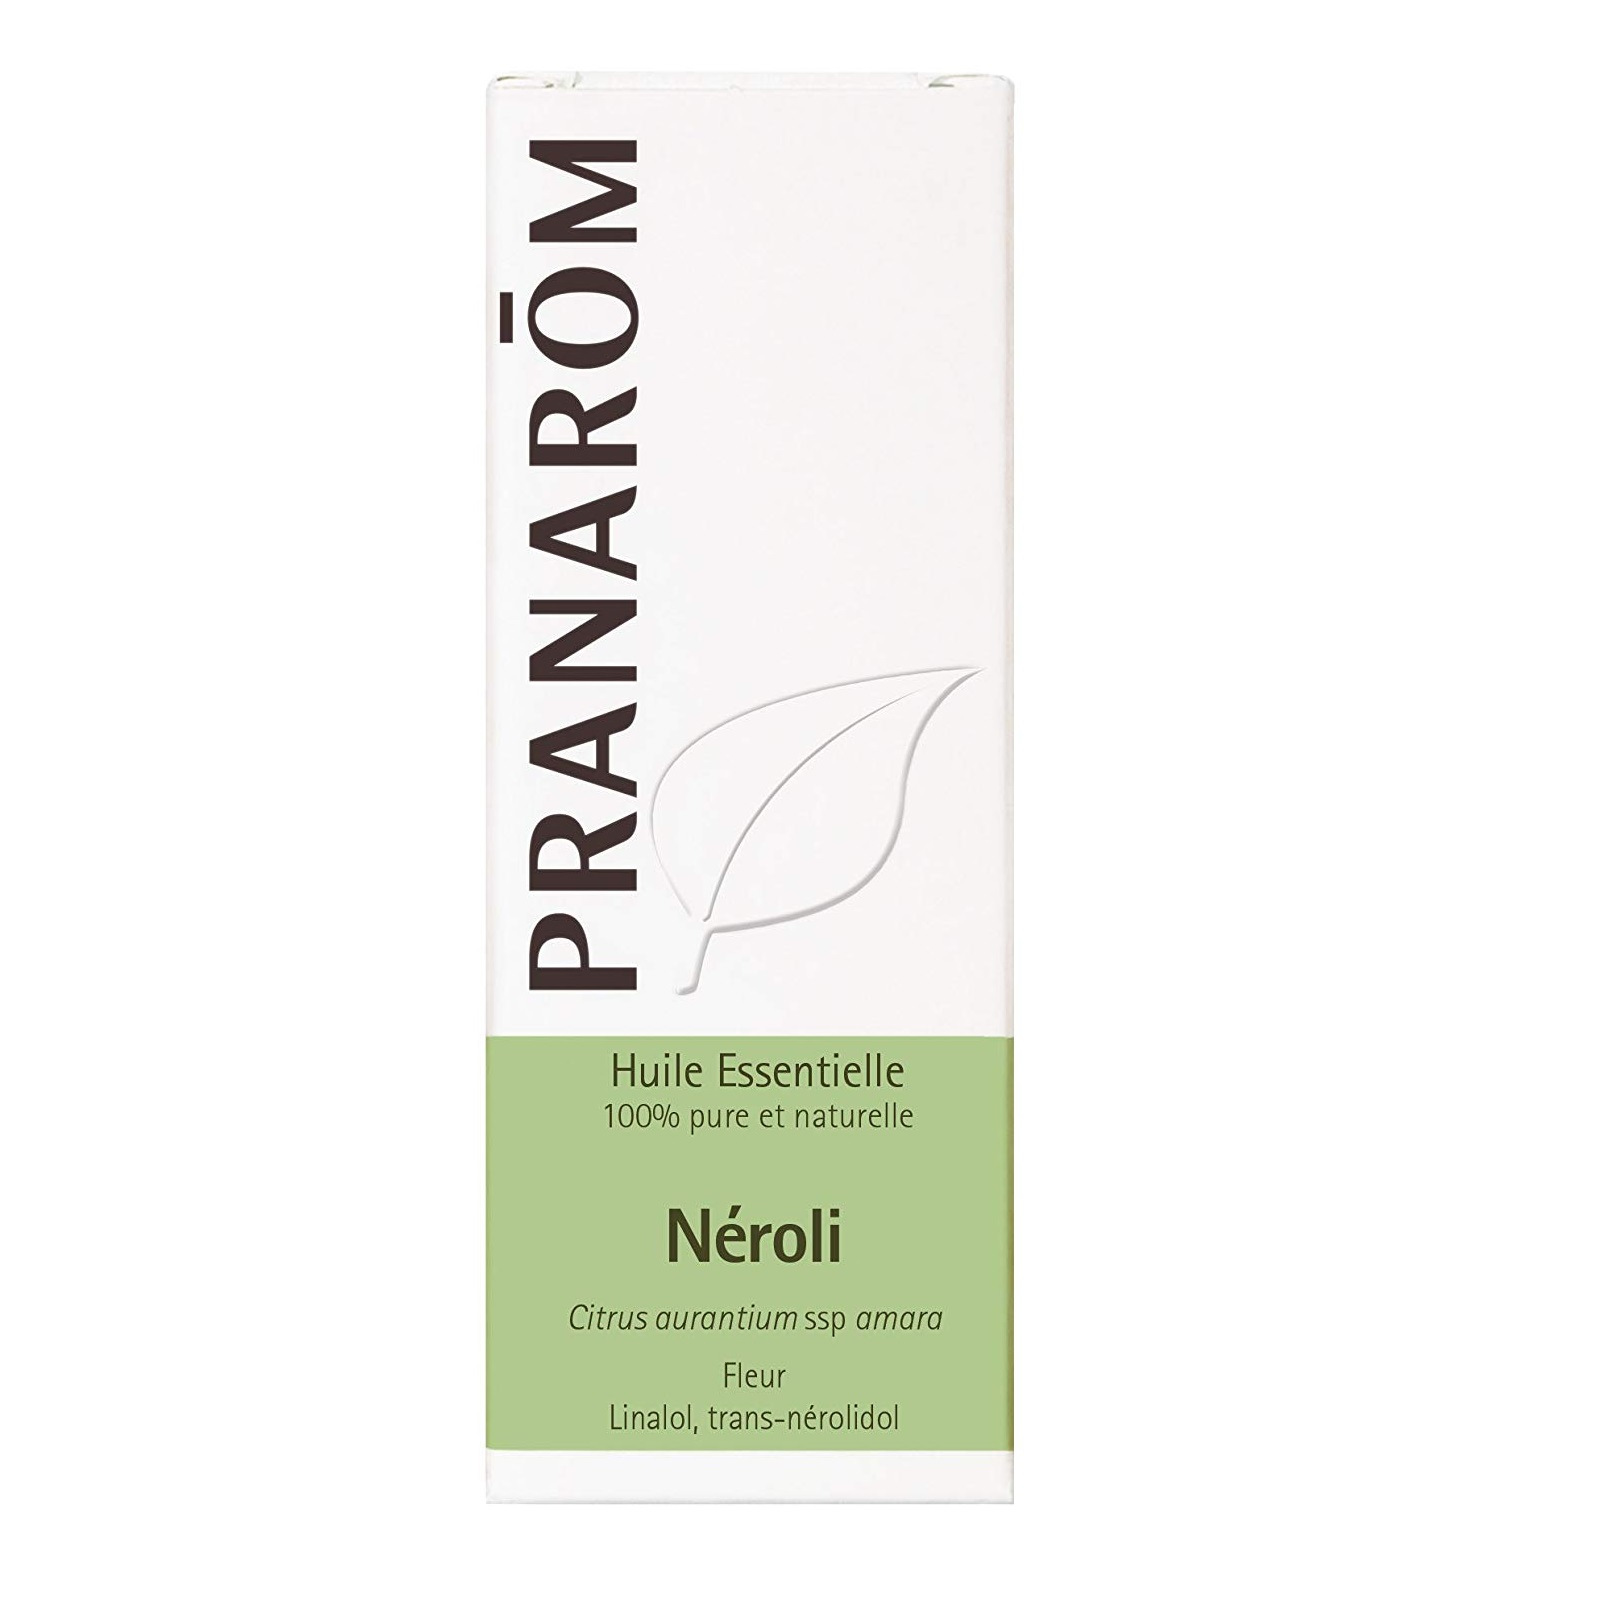 PRANAROM HUILE ESSENTIELLE NEROLI 2ML - Pharmacie Cap3000